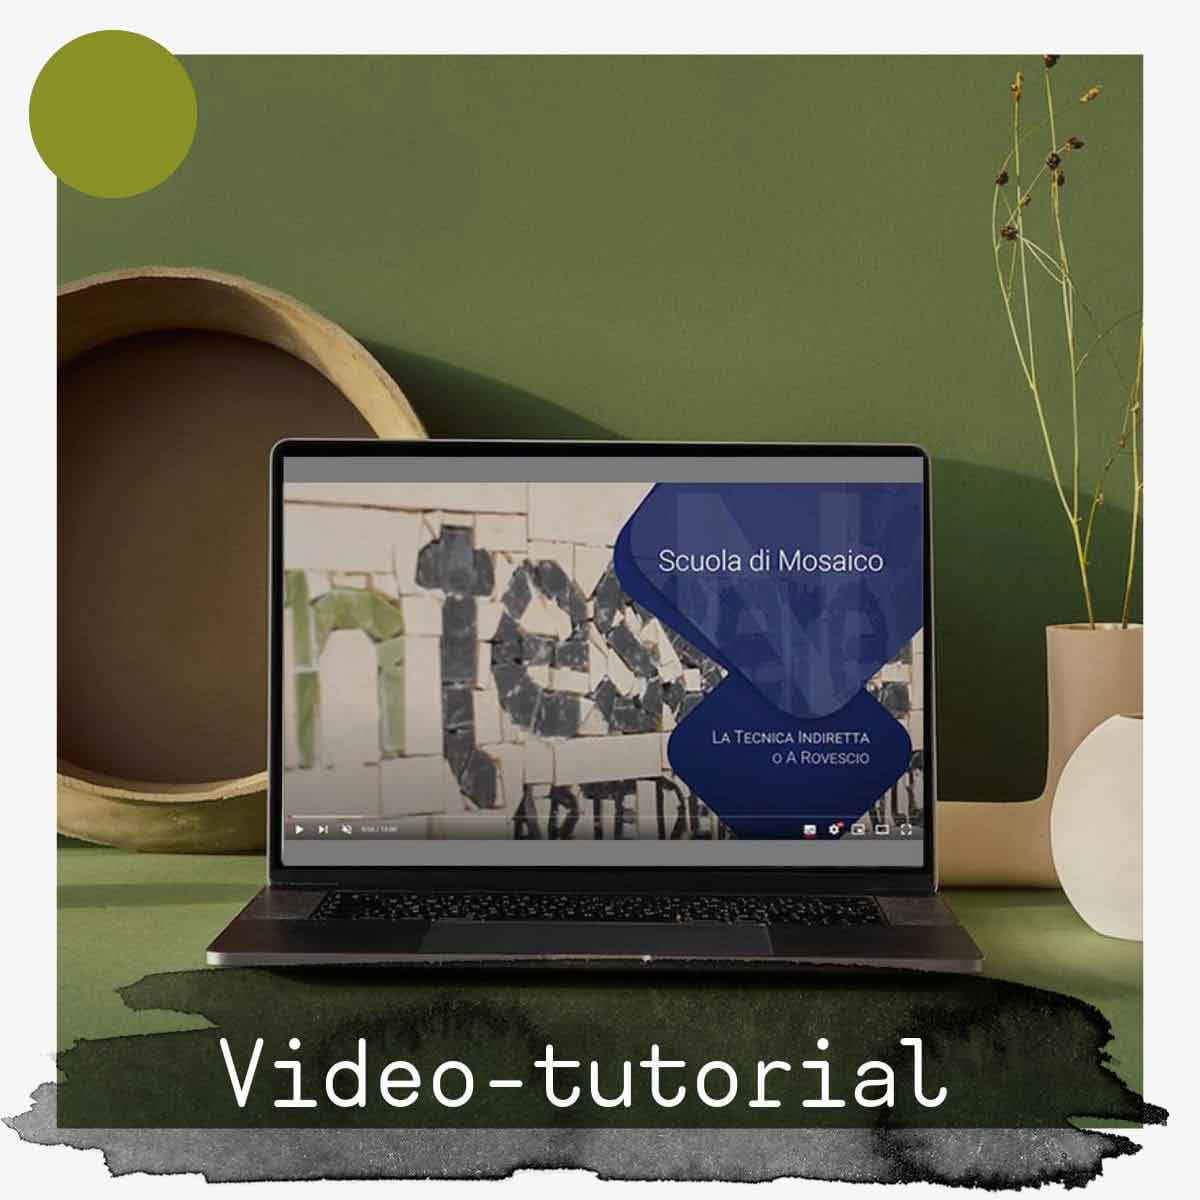 Kit mosaico "Flor Verde" + vídeo tutorial